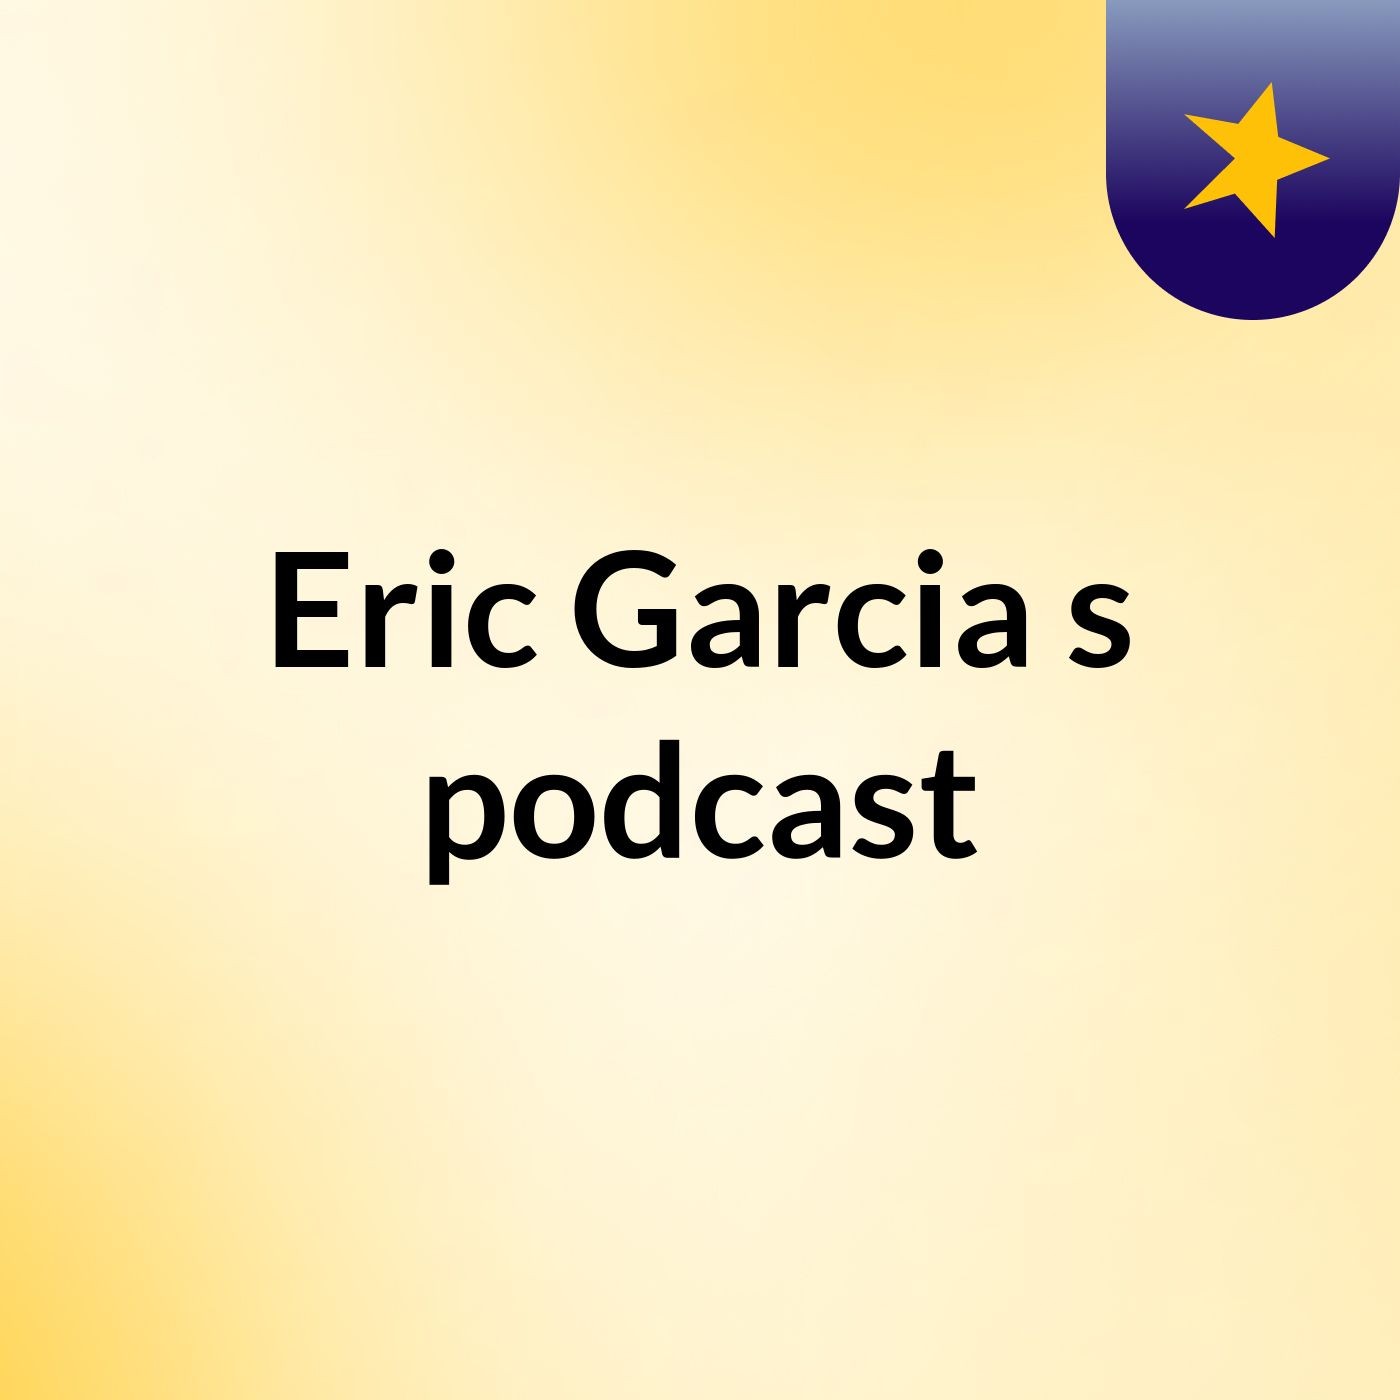 Eric Garcia's podcast